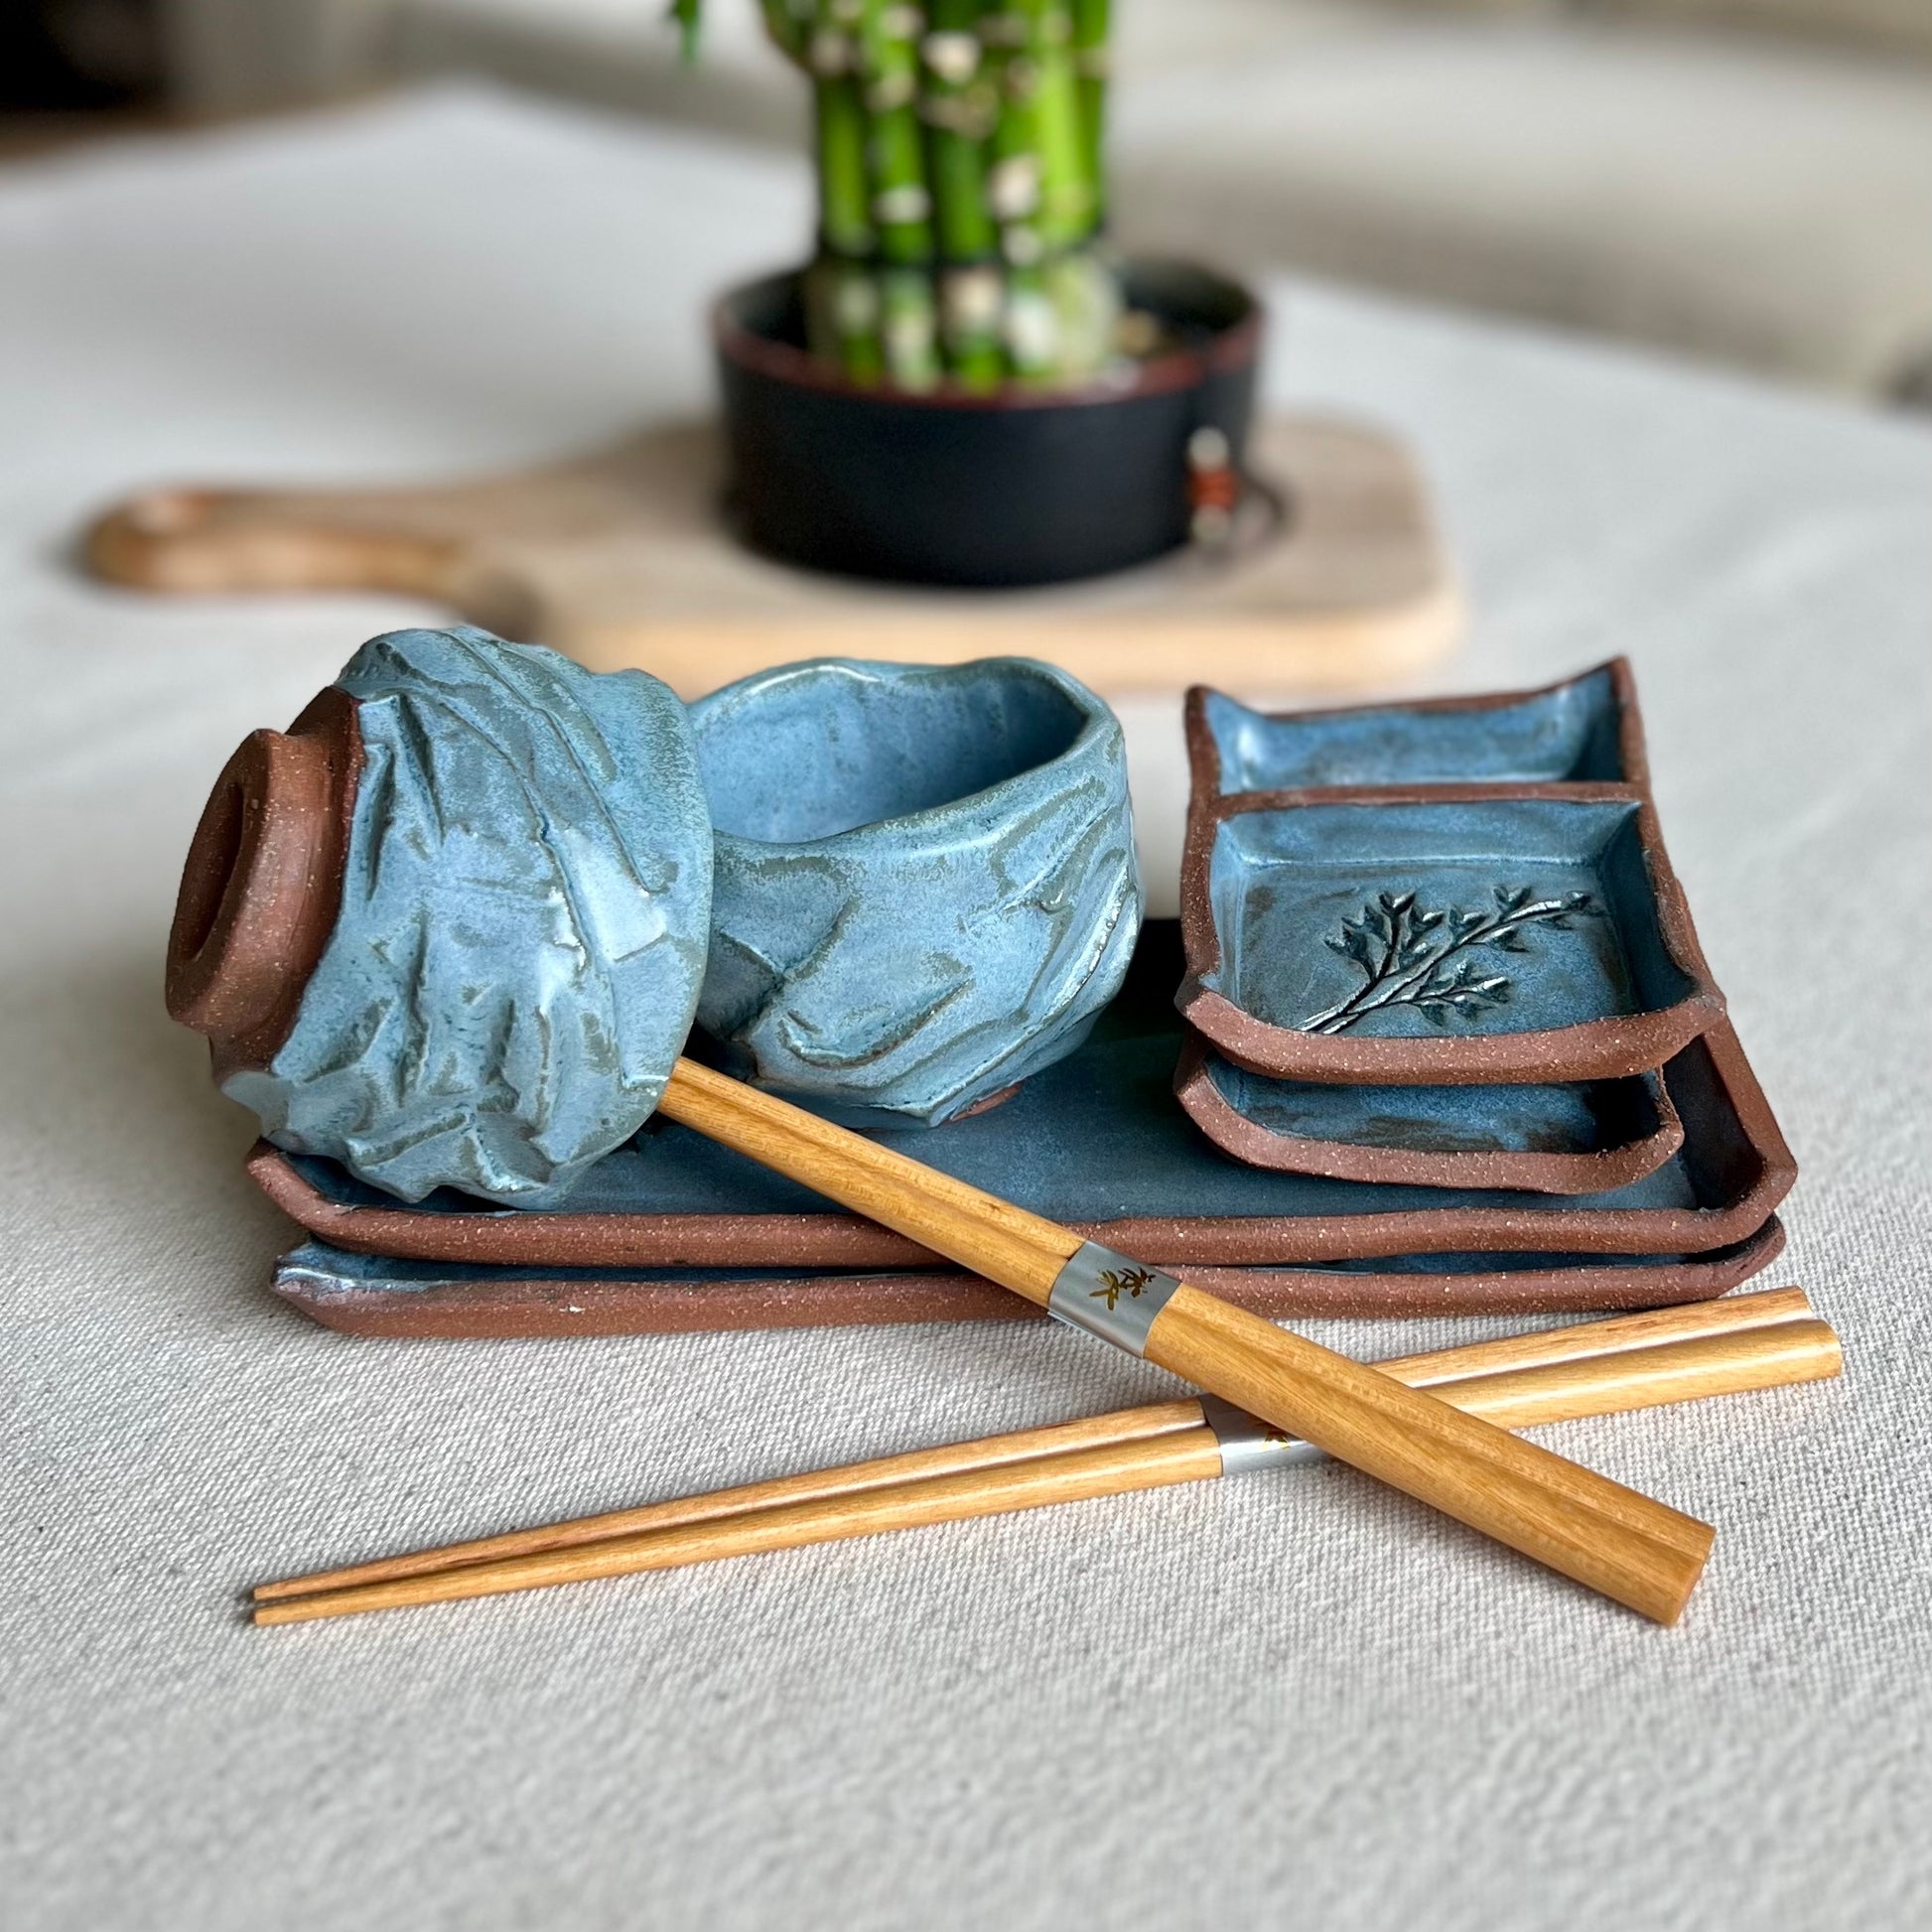 Miya Company Sendan Blue Sushi Set